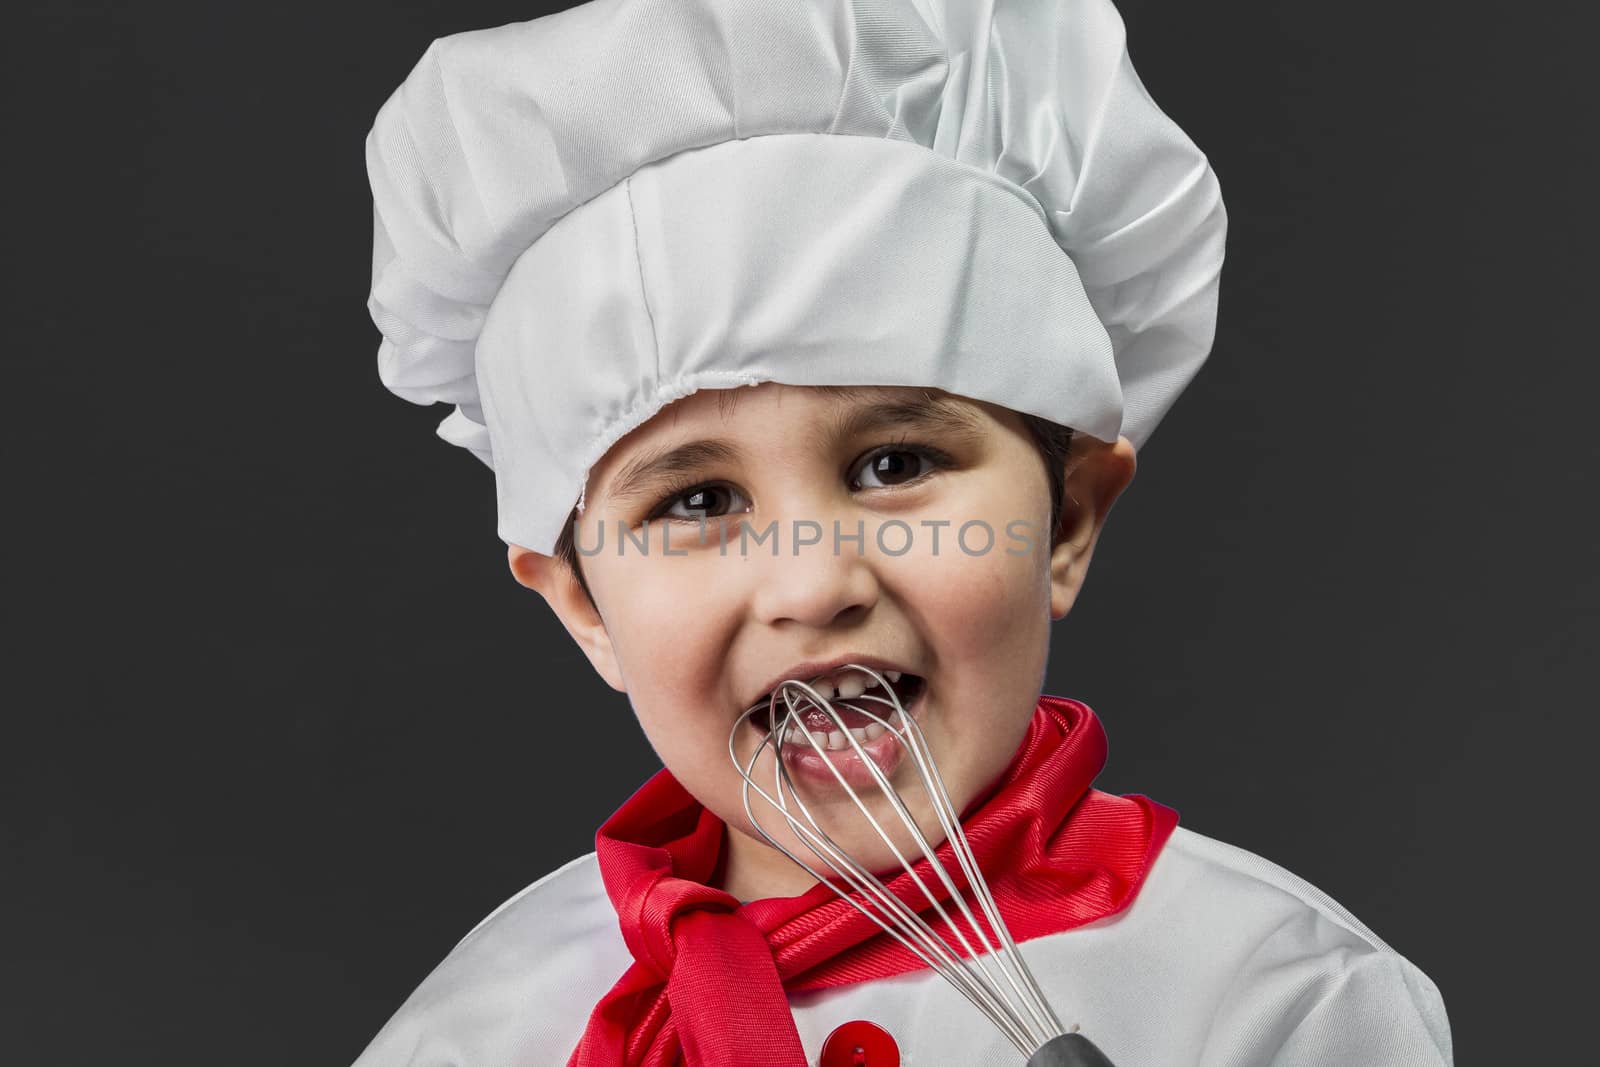 Childhood, Little boy preparing healthy food on kitchen over grey background, cook hat